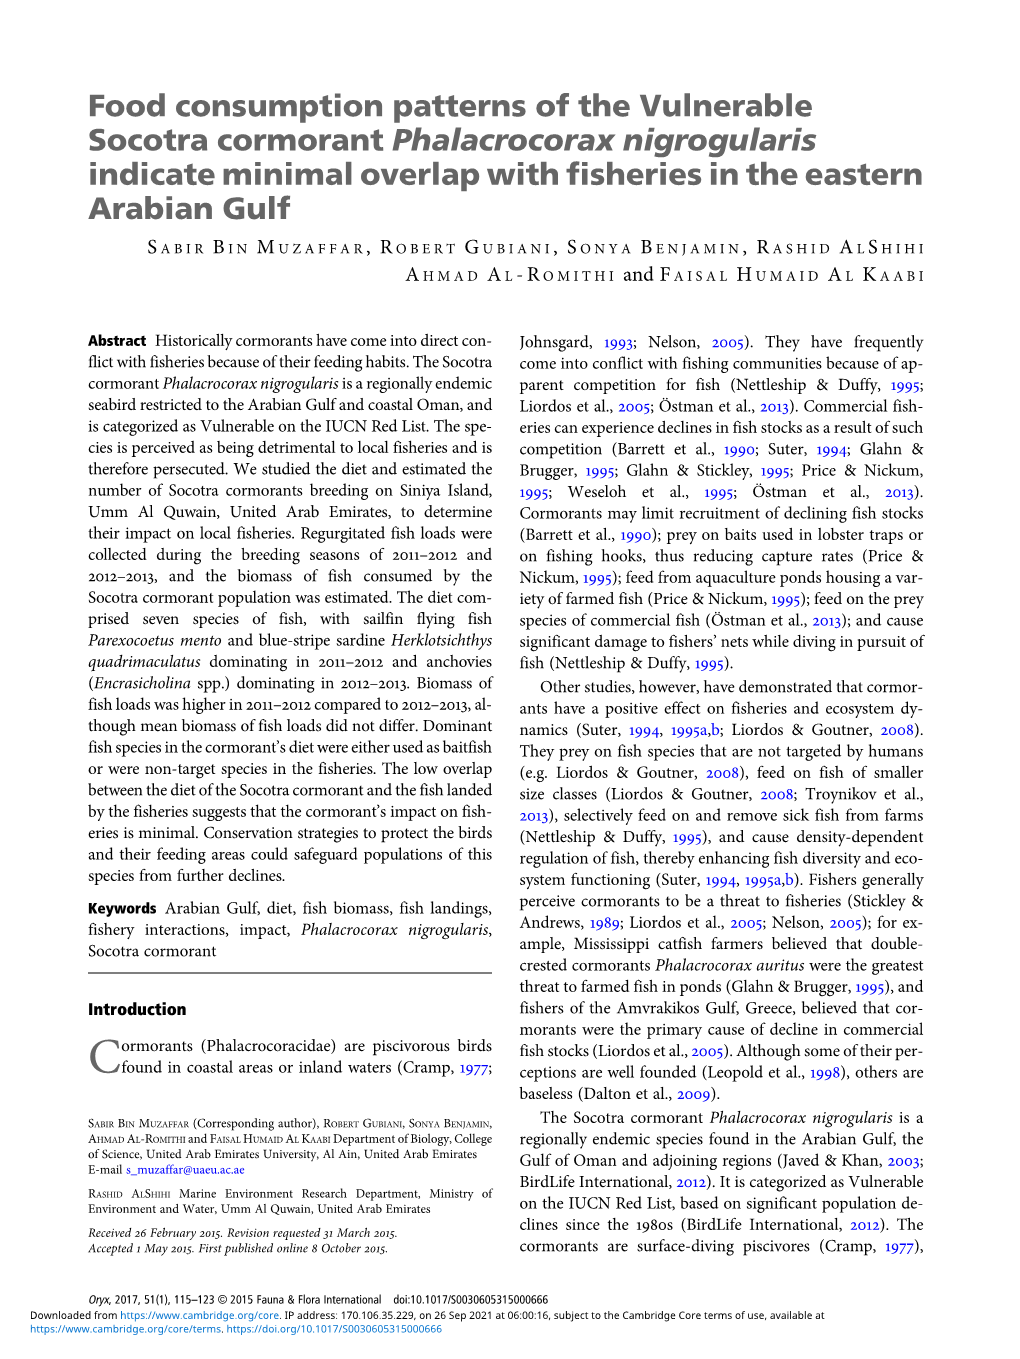 Food Consumption Patterns of the Vulnerable Socotra Cormorant Phalacrocorax Nigrogularis Indicate Minimal Overlap with Fisheries in the Eastern Arabian Gulf